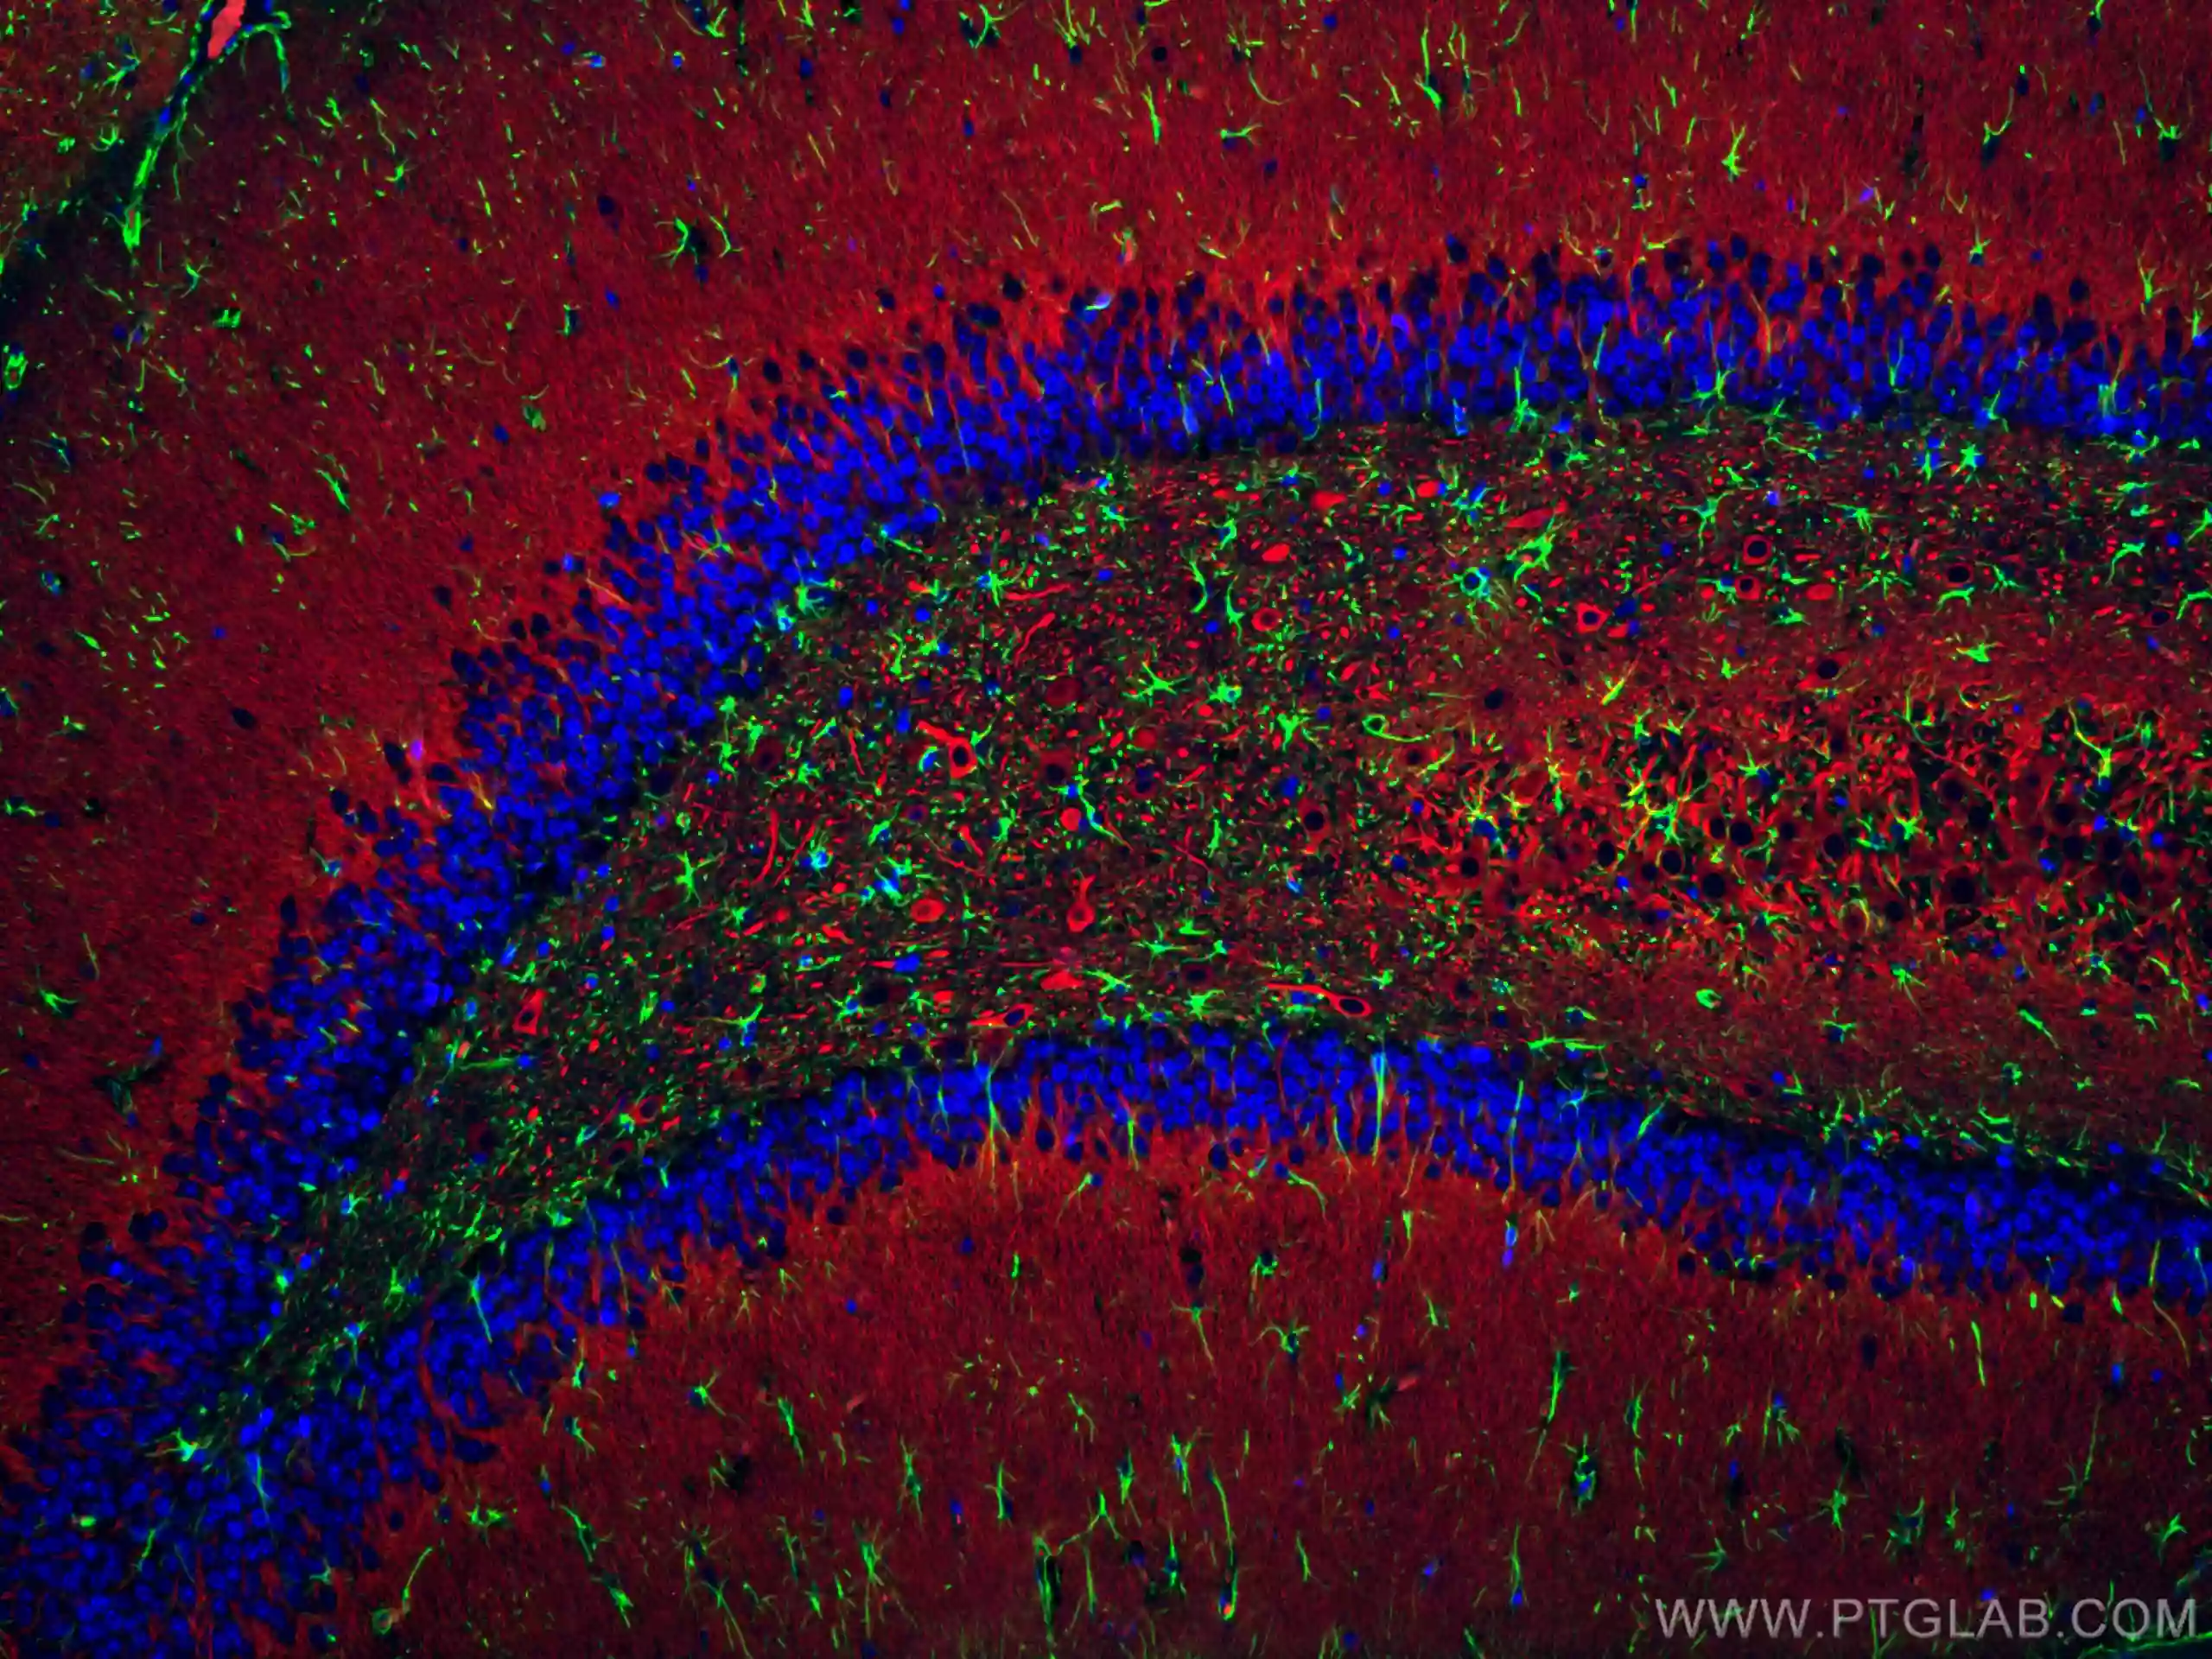 Immunofluorescent staining of rat brain using Proteintech's CoraLite Plus 488 GFAP antibody (CL488-16825, green), CoraLite 594 MAP2 antibody (CL594-17490, red), and DAPI (blue)